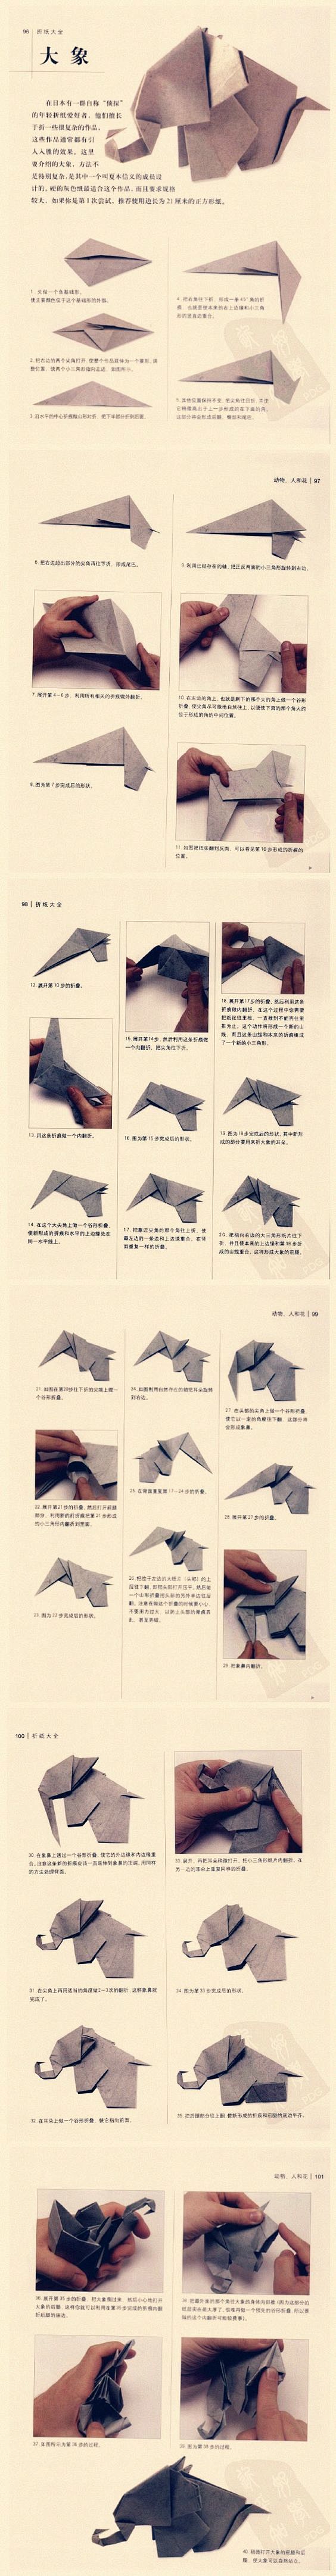 origami elephant-lov...